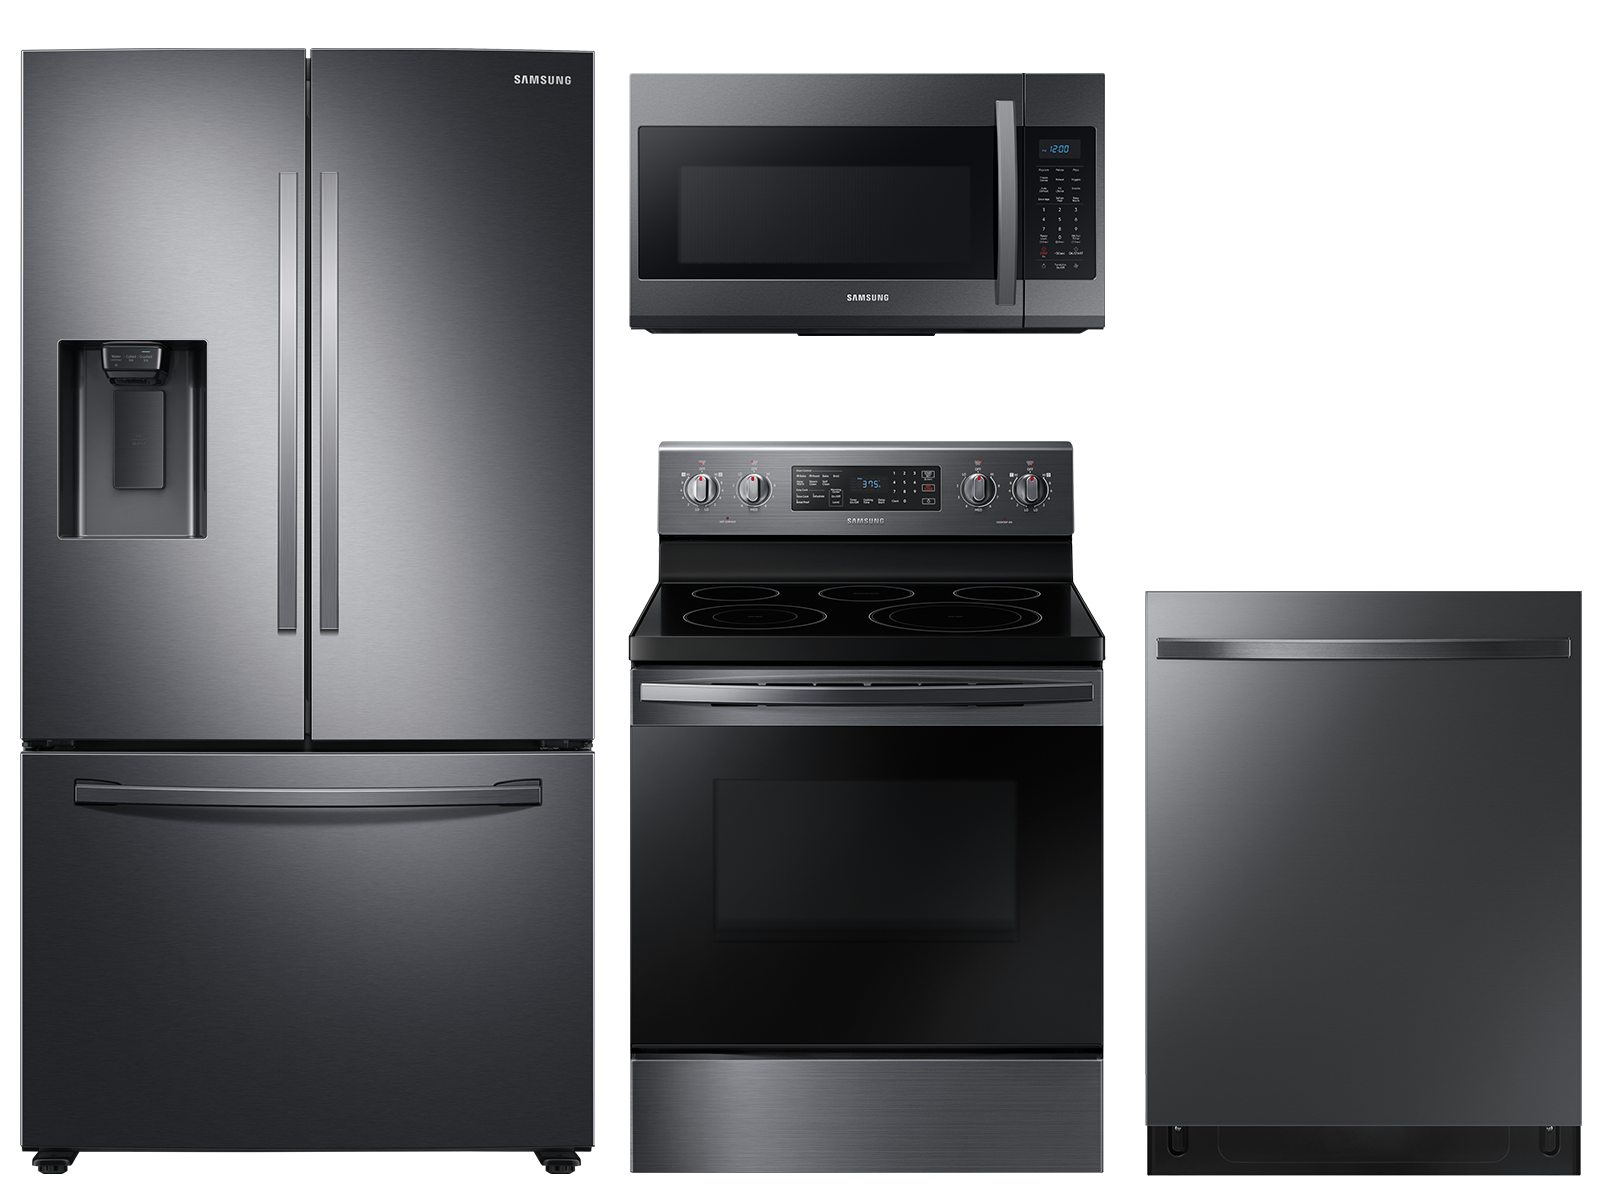 Samsung Large capacity 3-door refrigerator & electric range package in Black stainless(BNDL-1590165023311)